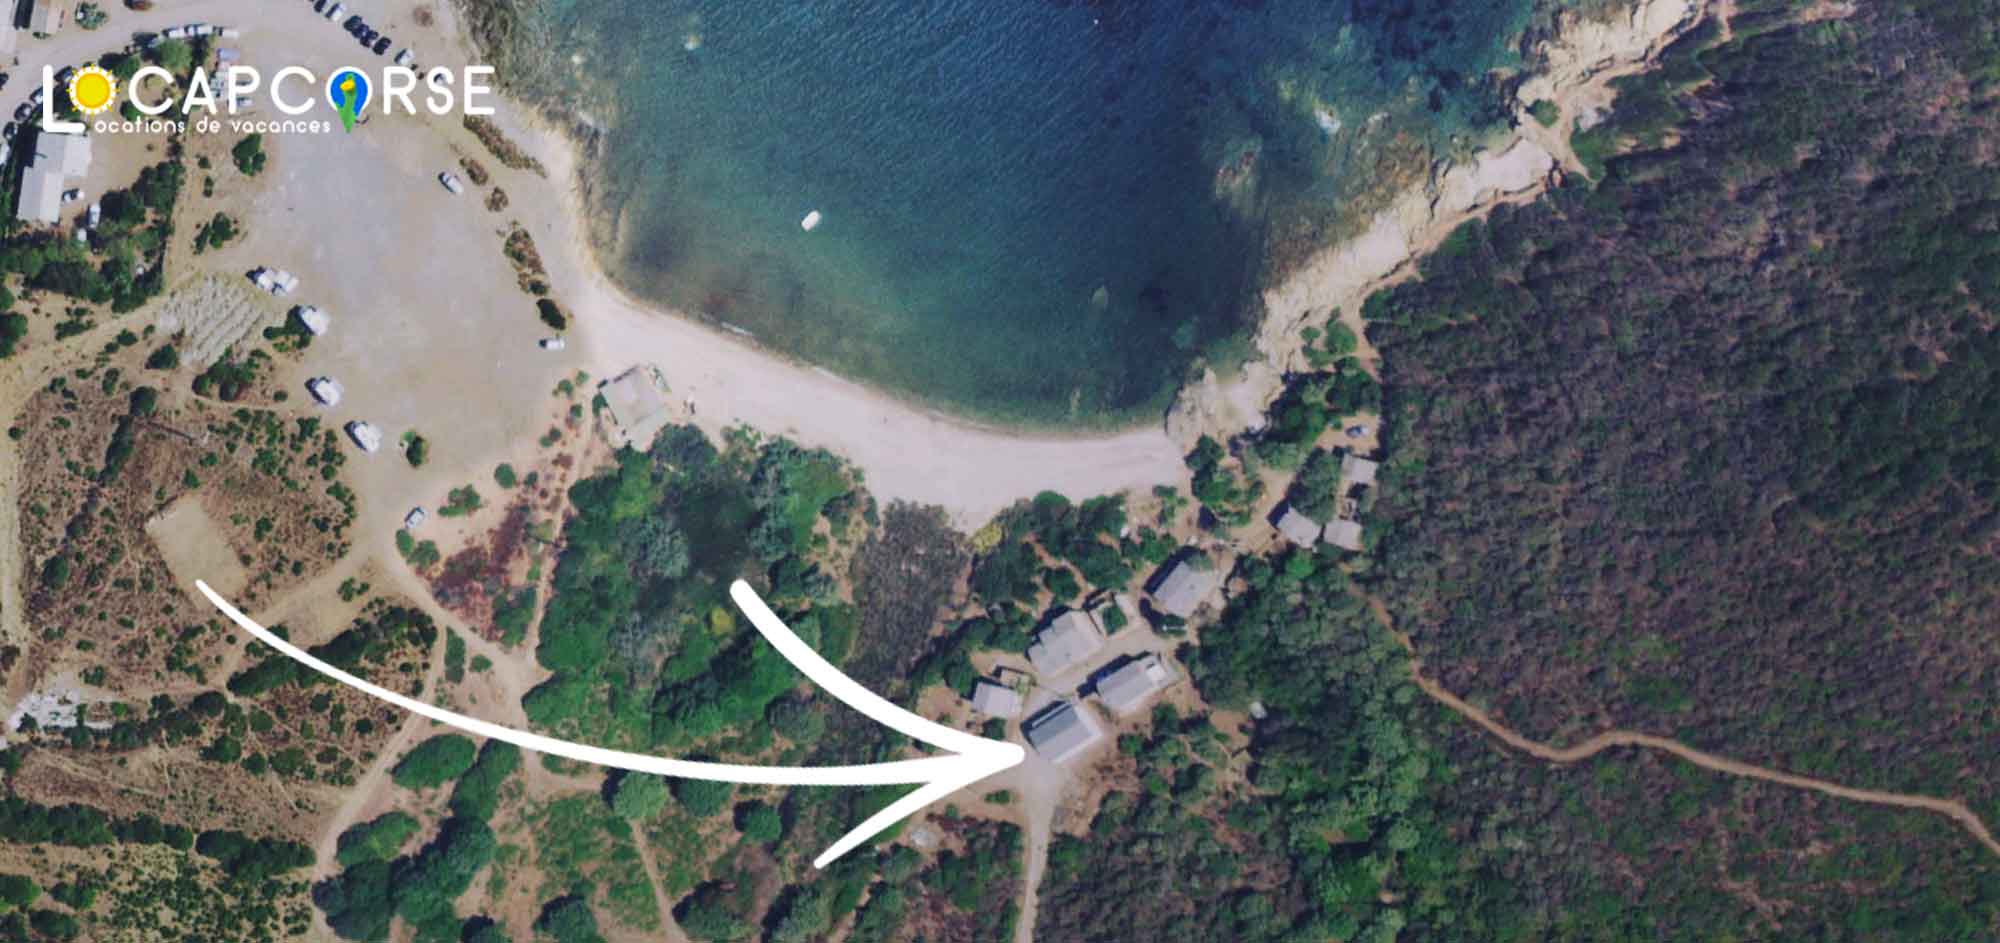 Vue satellite de la location de vacances à Tollare/Barcaggio dans le Cap Corse